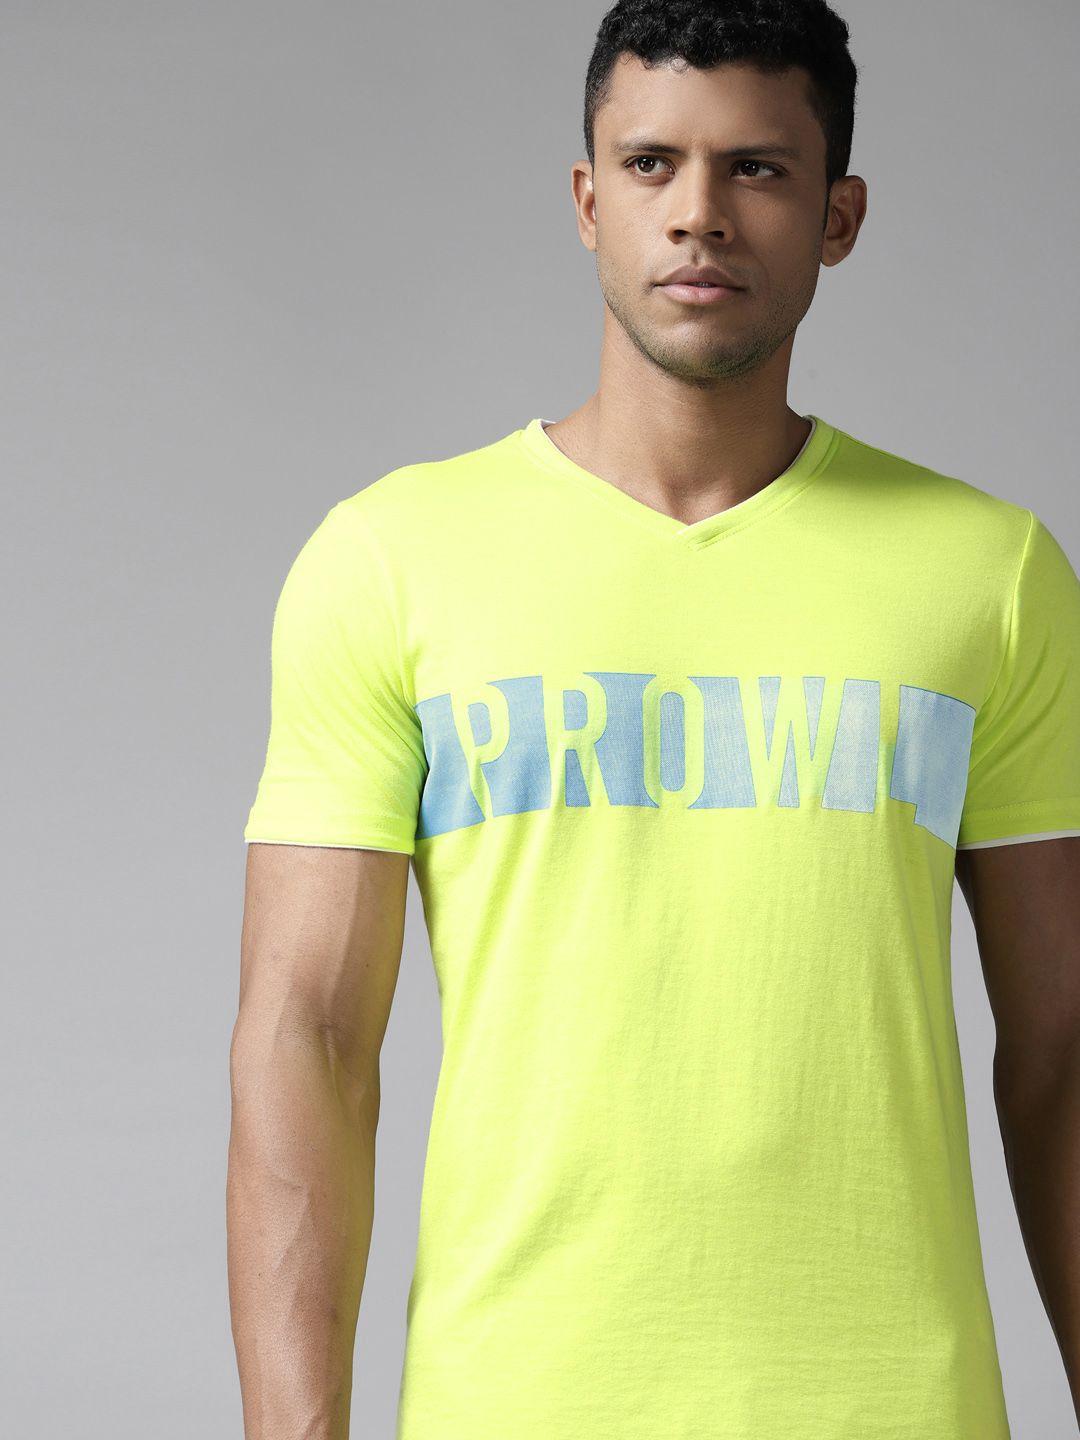 prowl brand logo printed detail v-neck t-shirt